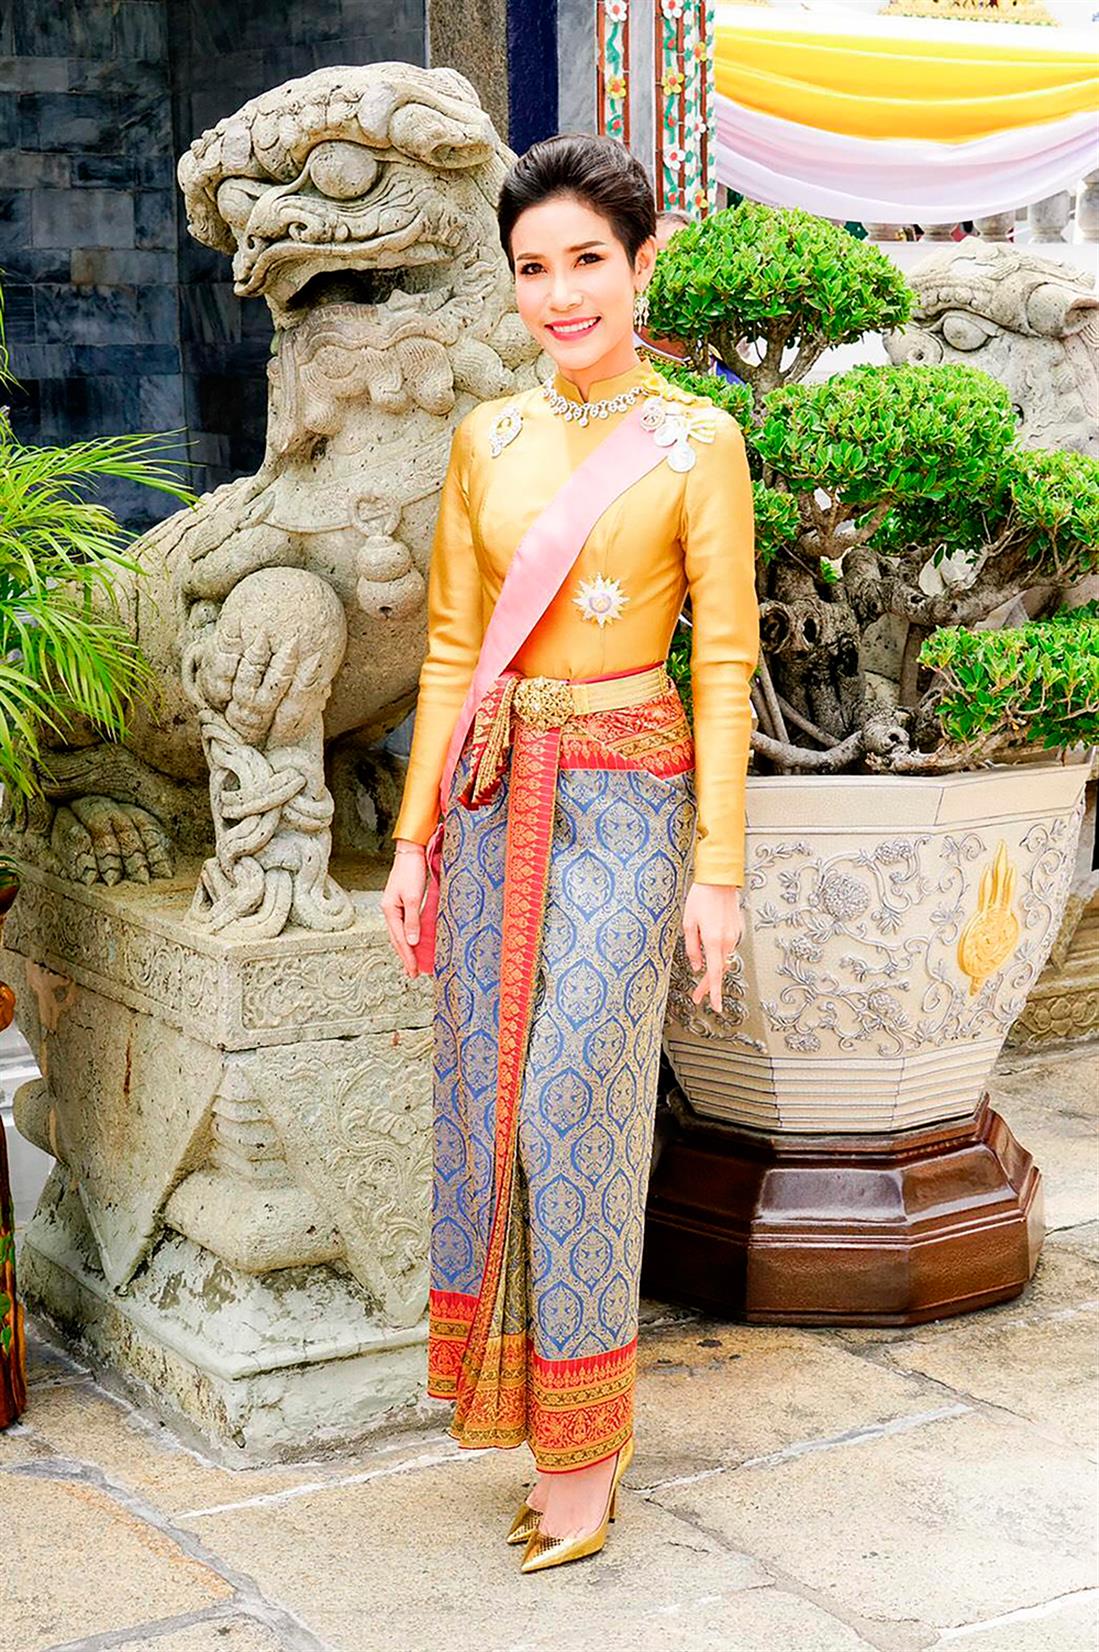 AP - Βασιλιάς Ταϊλάνδης - Μάχα Βατζιραλόνγκορν - Σινεένατ Γονγκβατζιραπάκντι